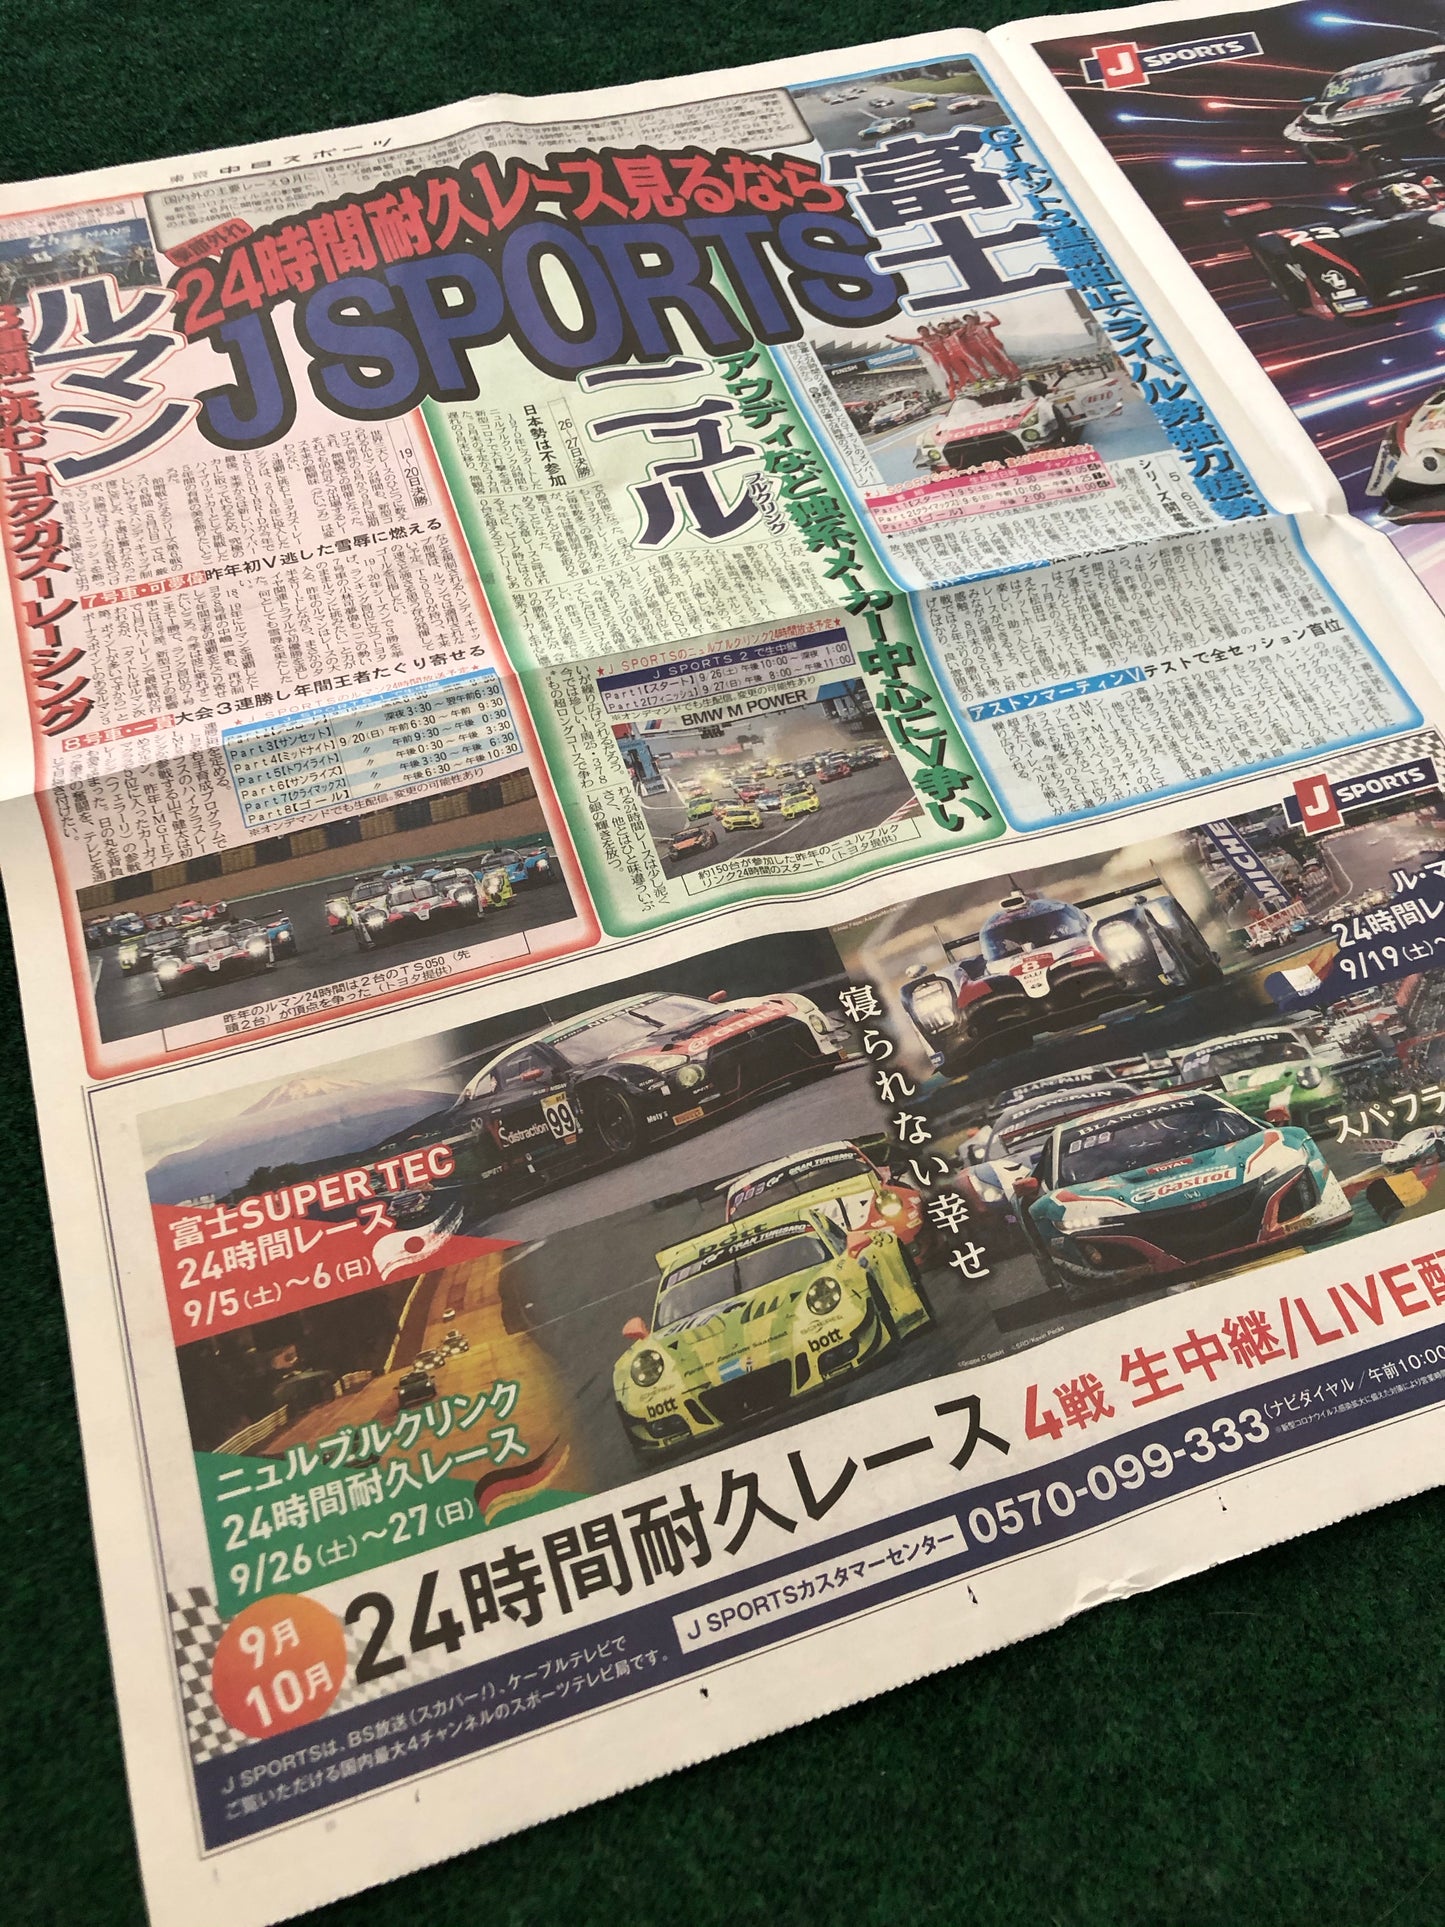 Super Taikyu 2020 - Motorsport Newspaper Feature - Tokyo Chunichi Shimbun Sports